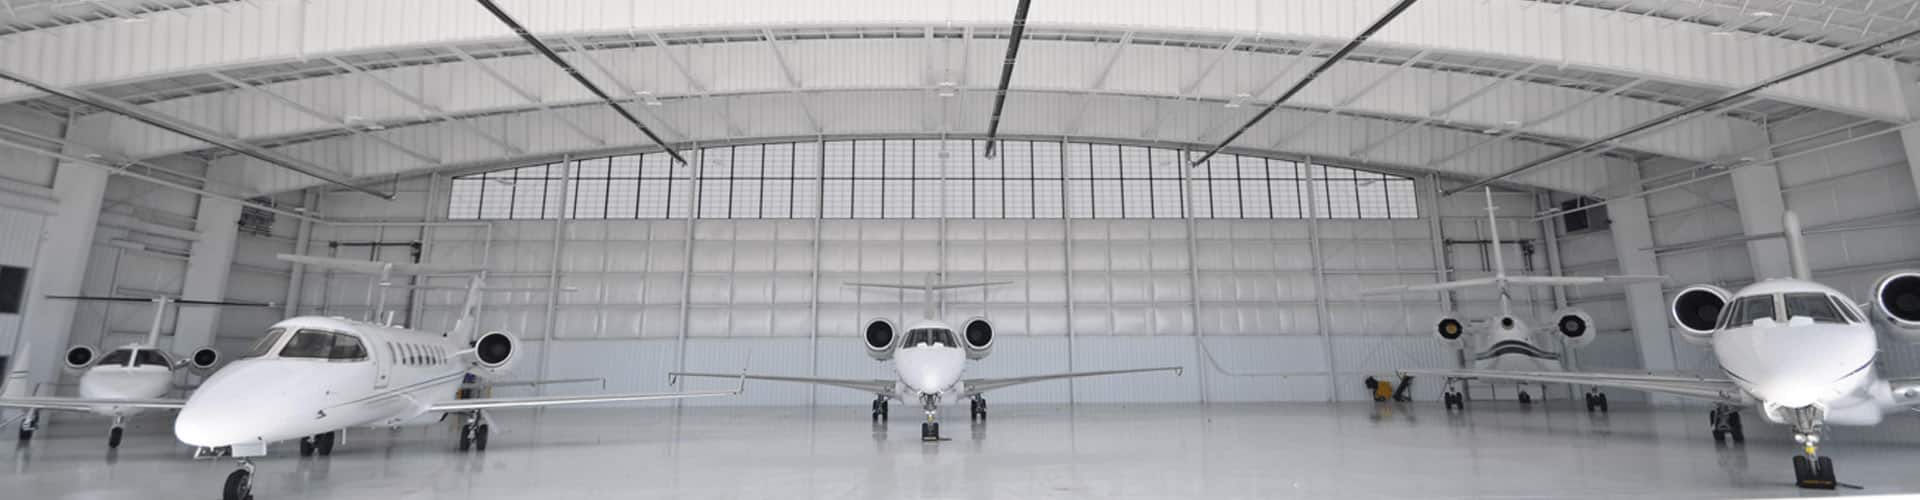 Aeroplanes inside the hangar